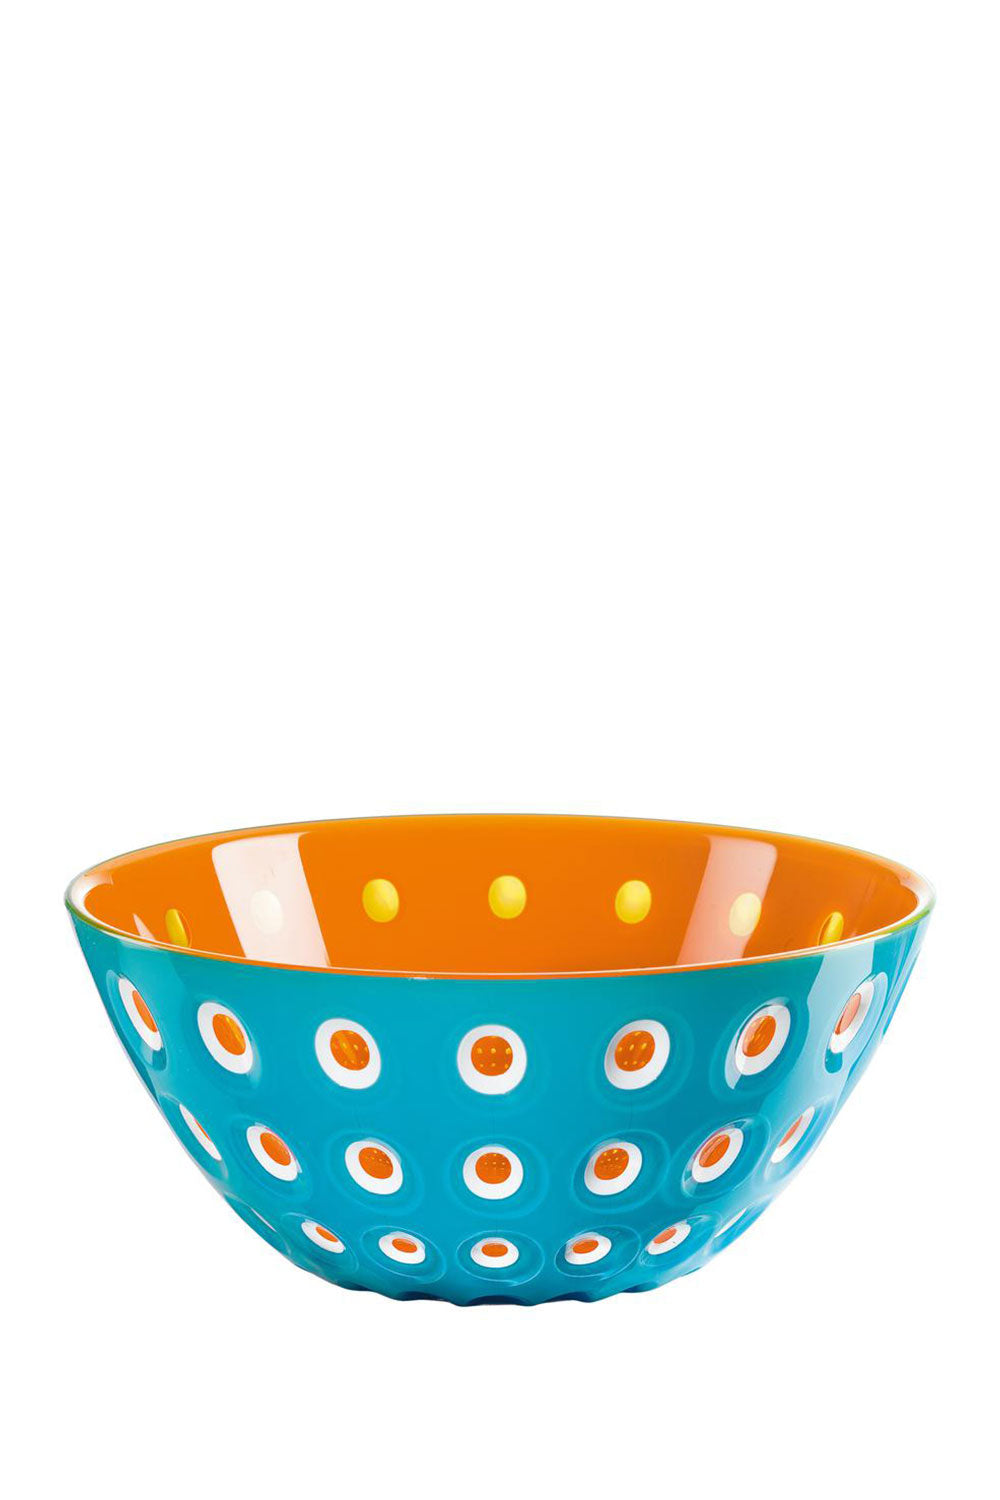 Murrine Blue & Orange Bowl, 25 cm - Maison7